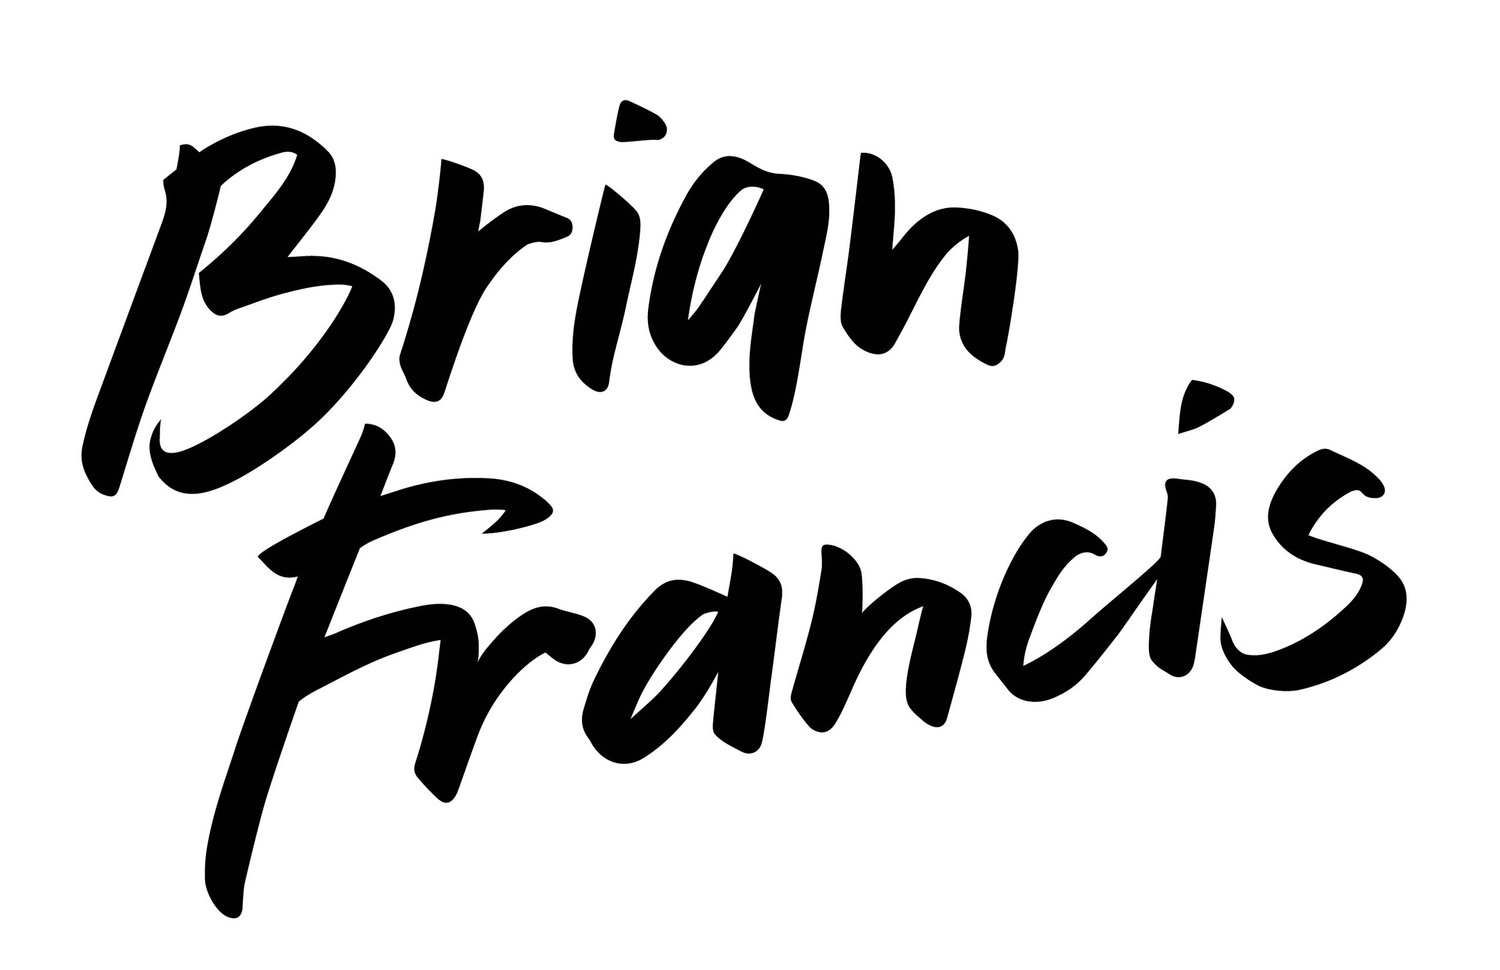 Brian Francis